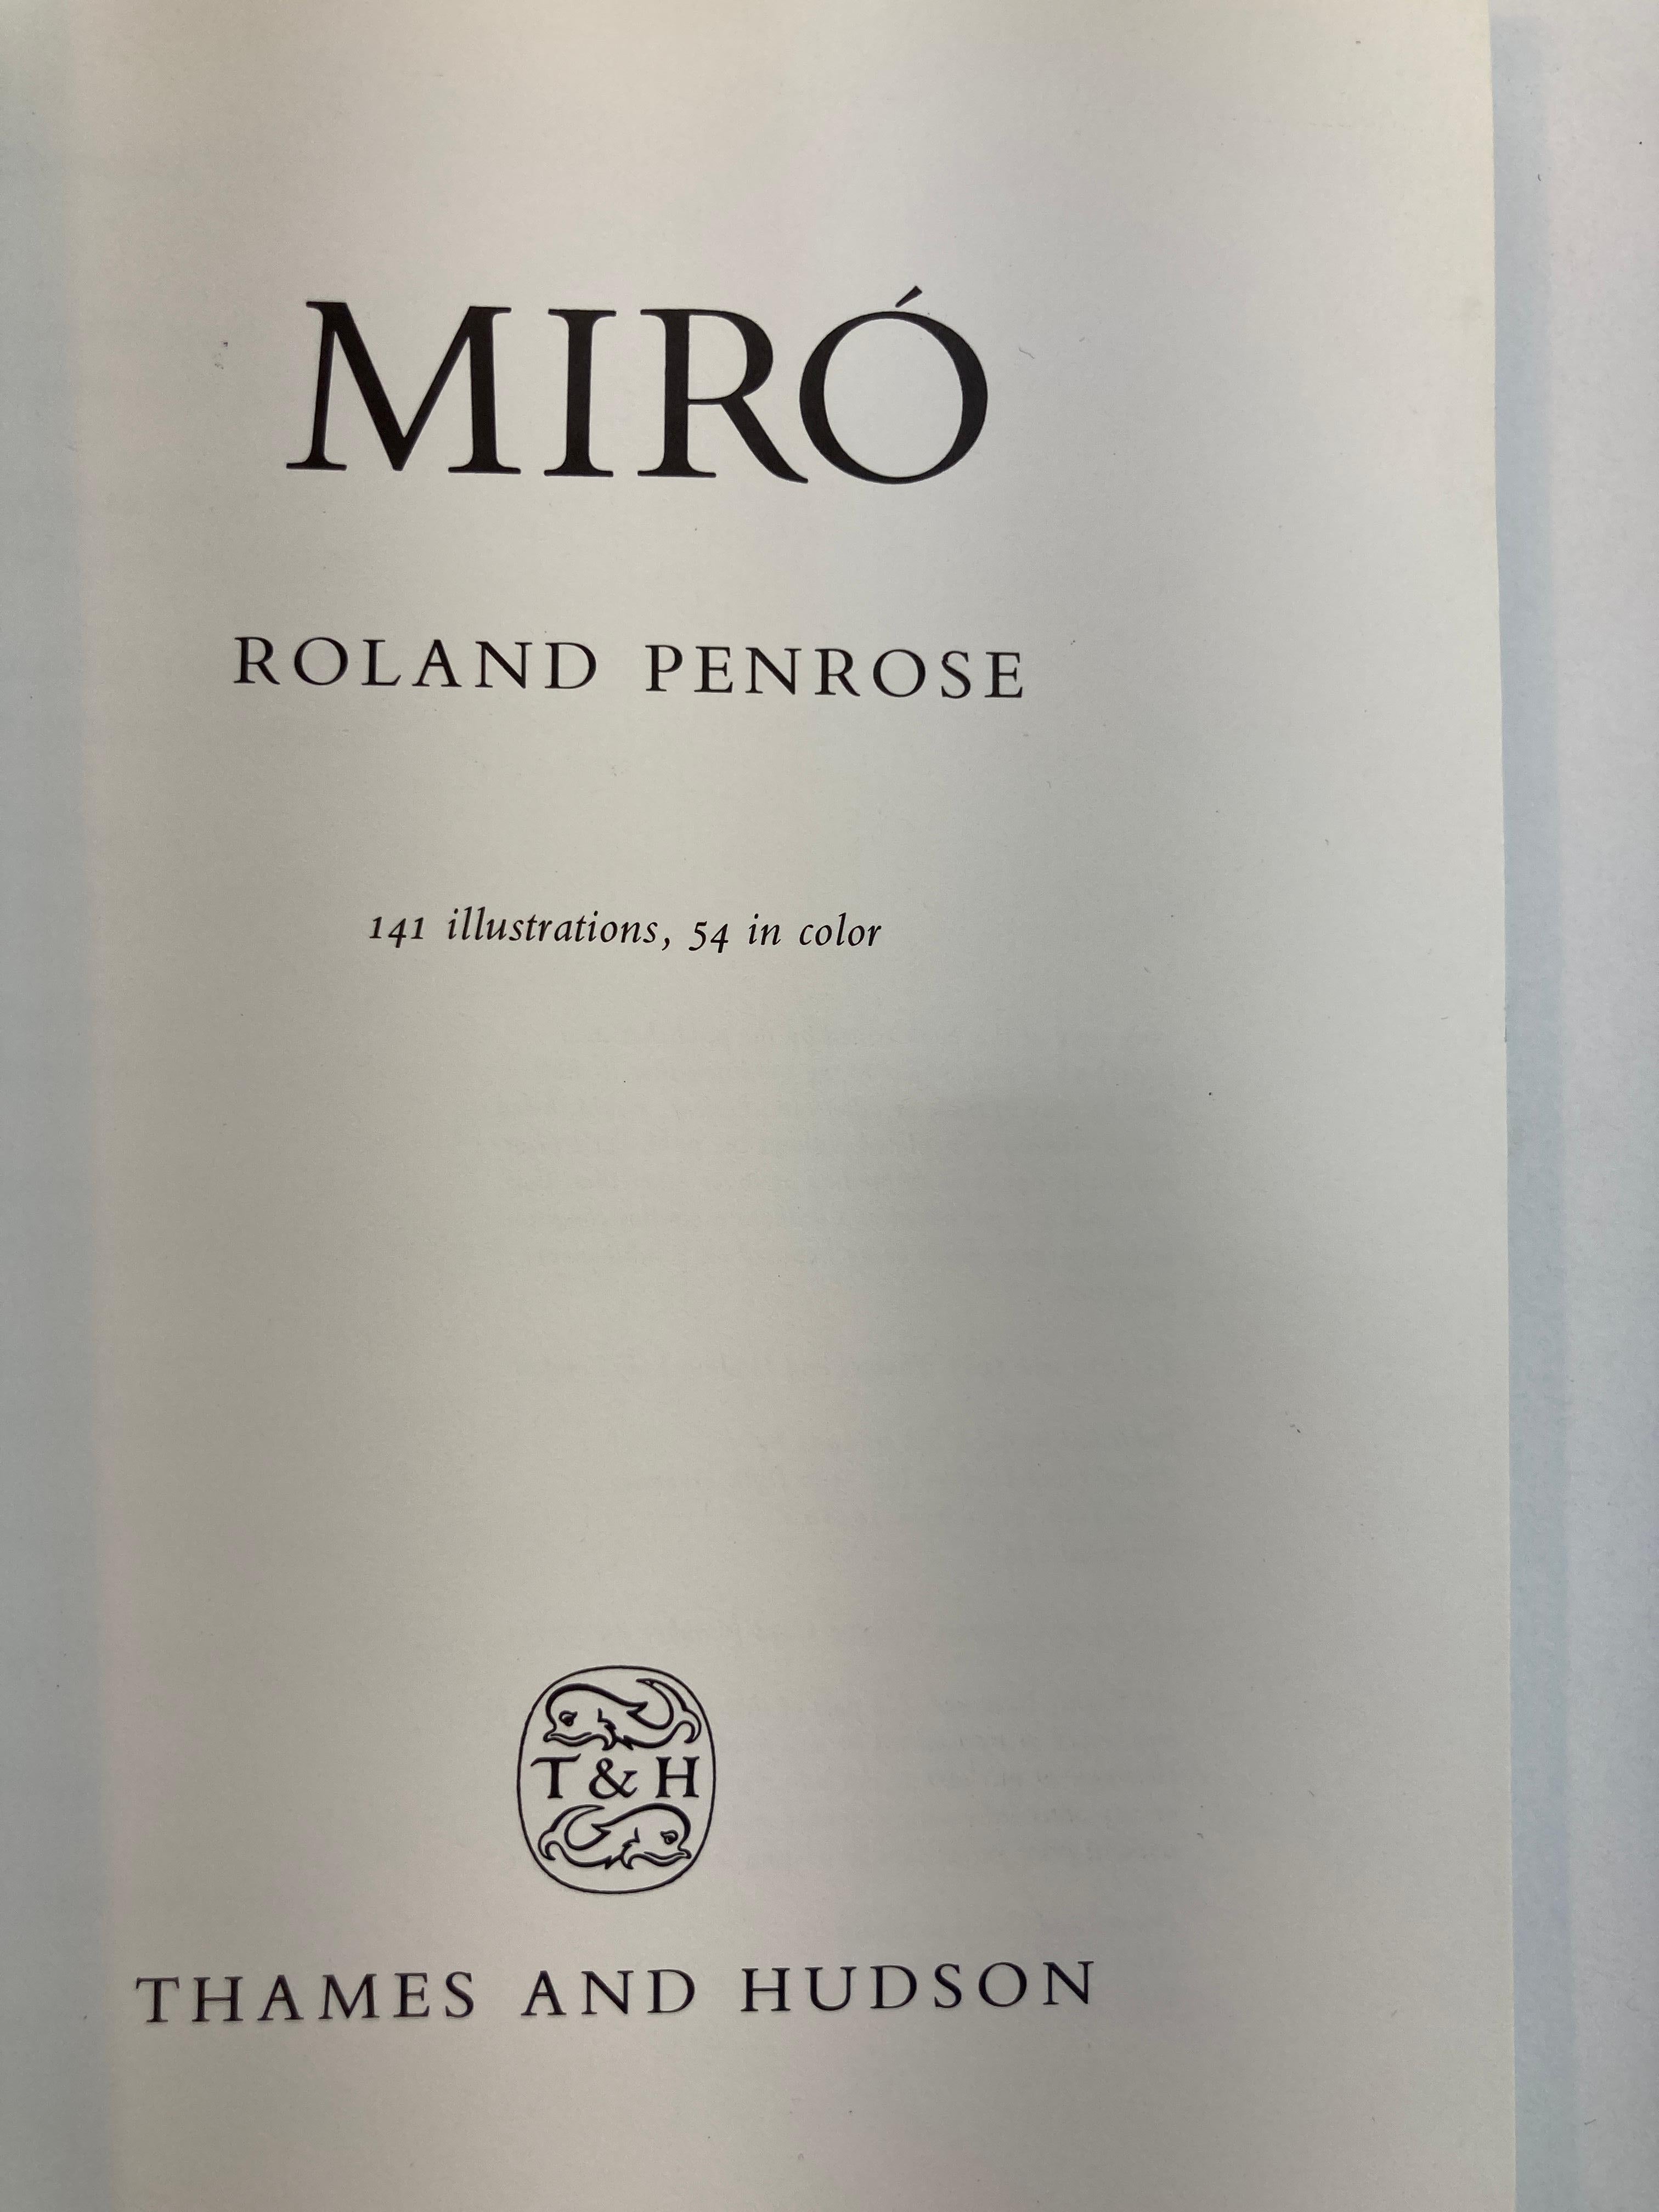 Miro World of Art Paperback 1985 by Roland Penrose 1